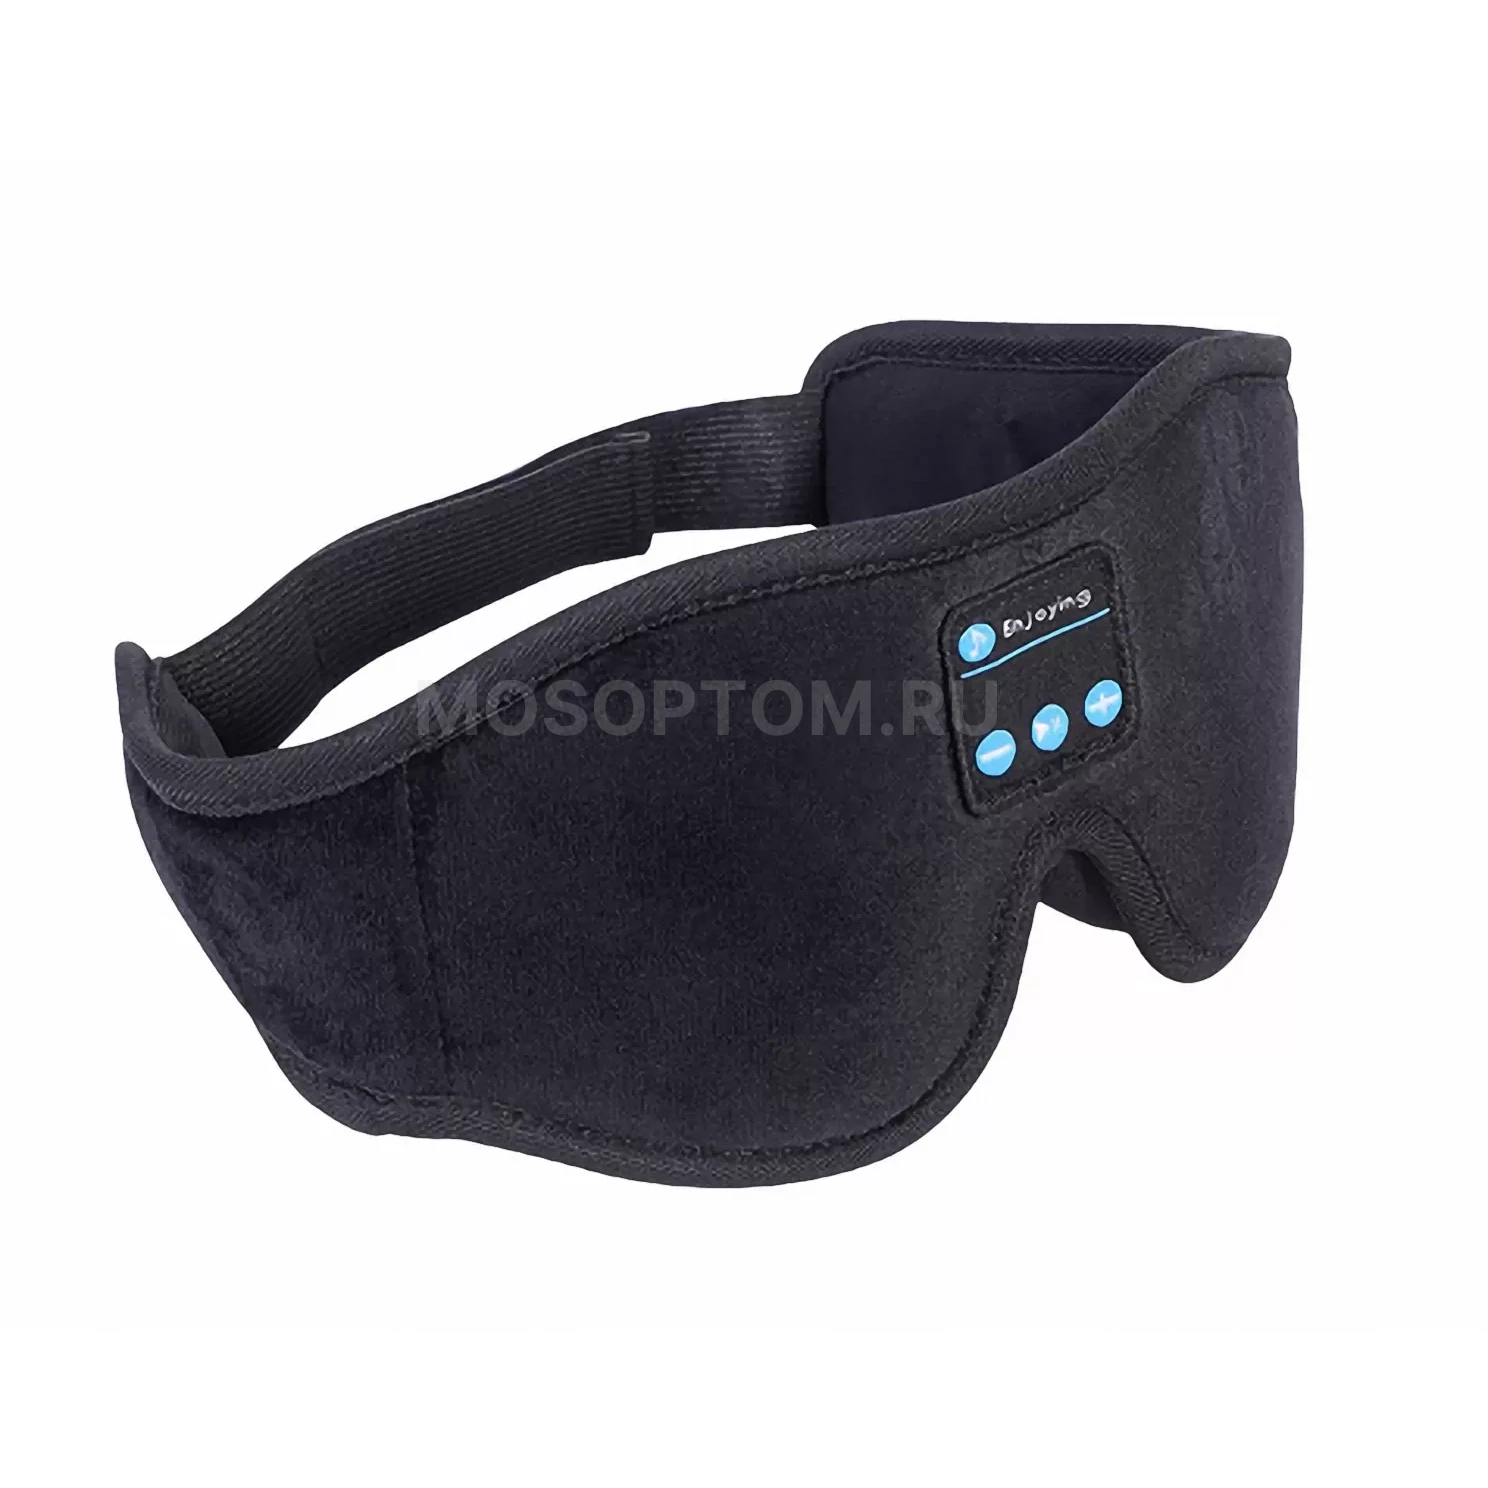 Маска-повязка на глаза для сна с музыкой 3D Bluetooth Eye Mask оптом